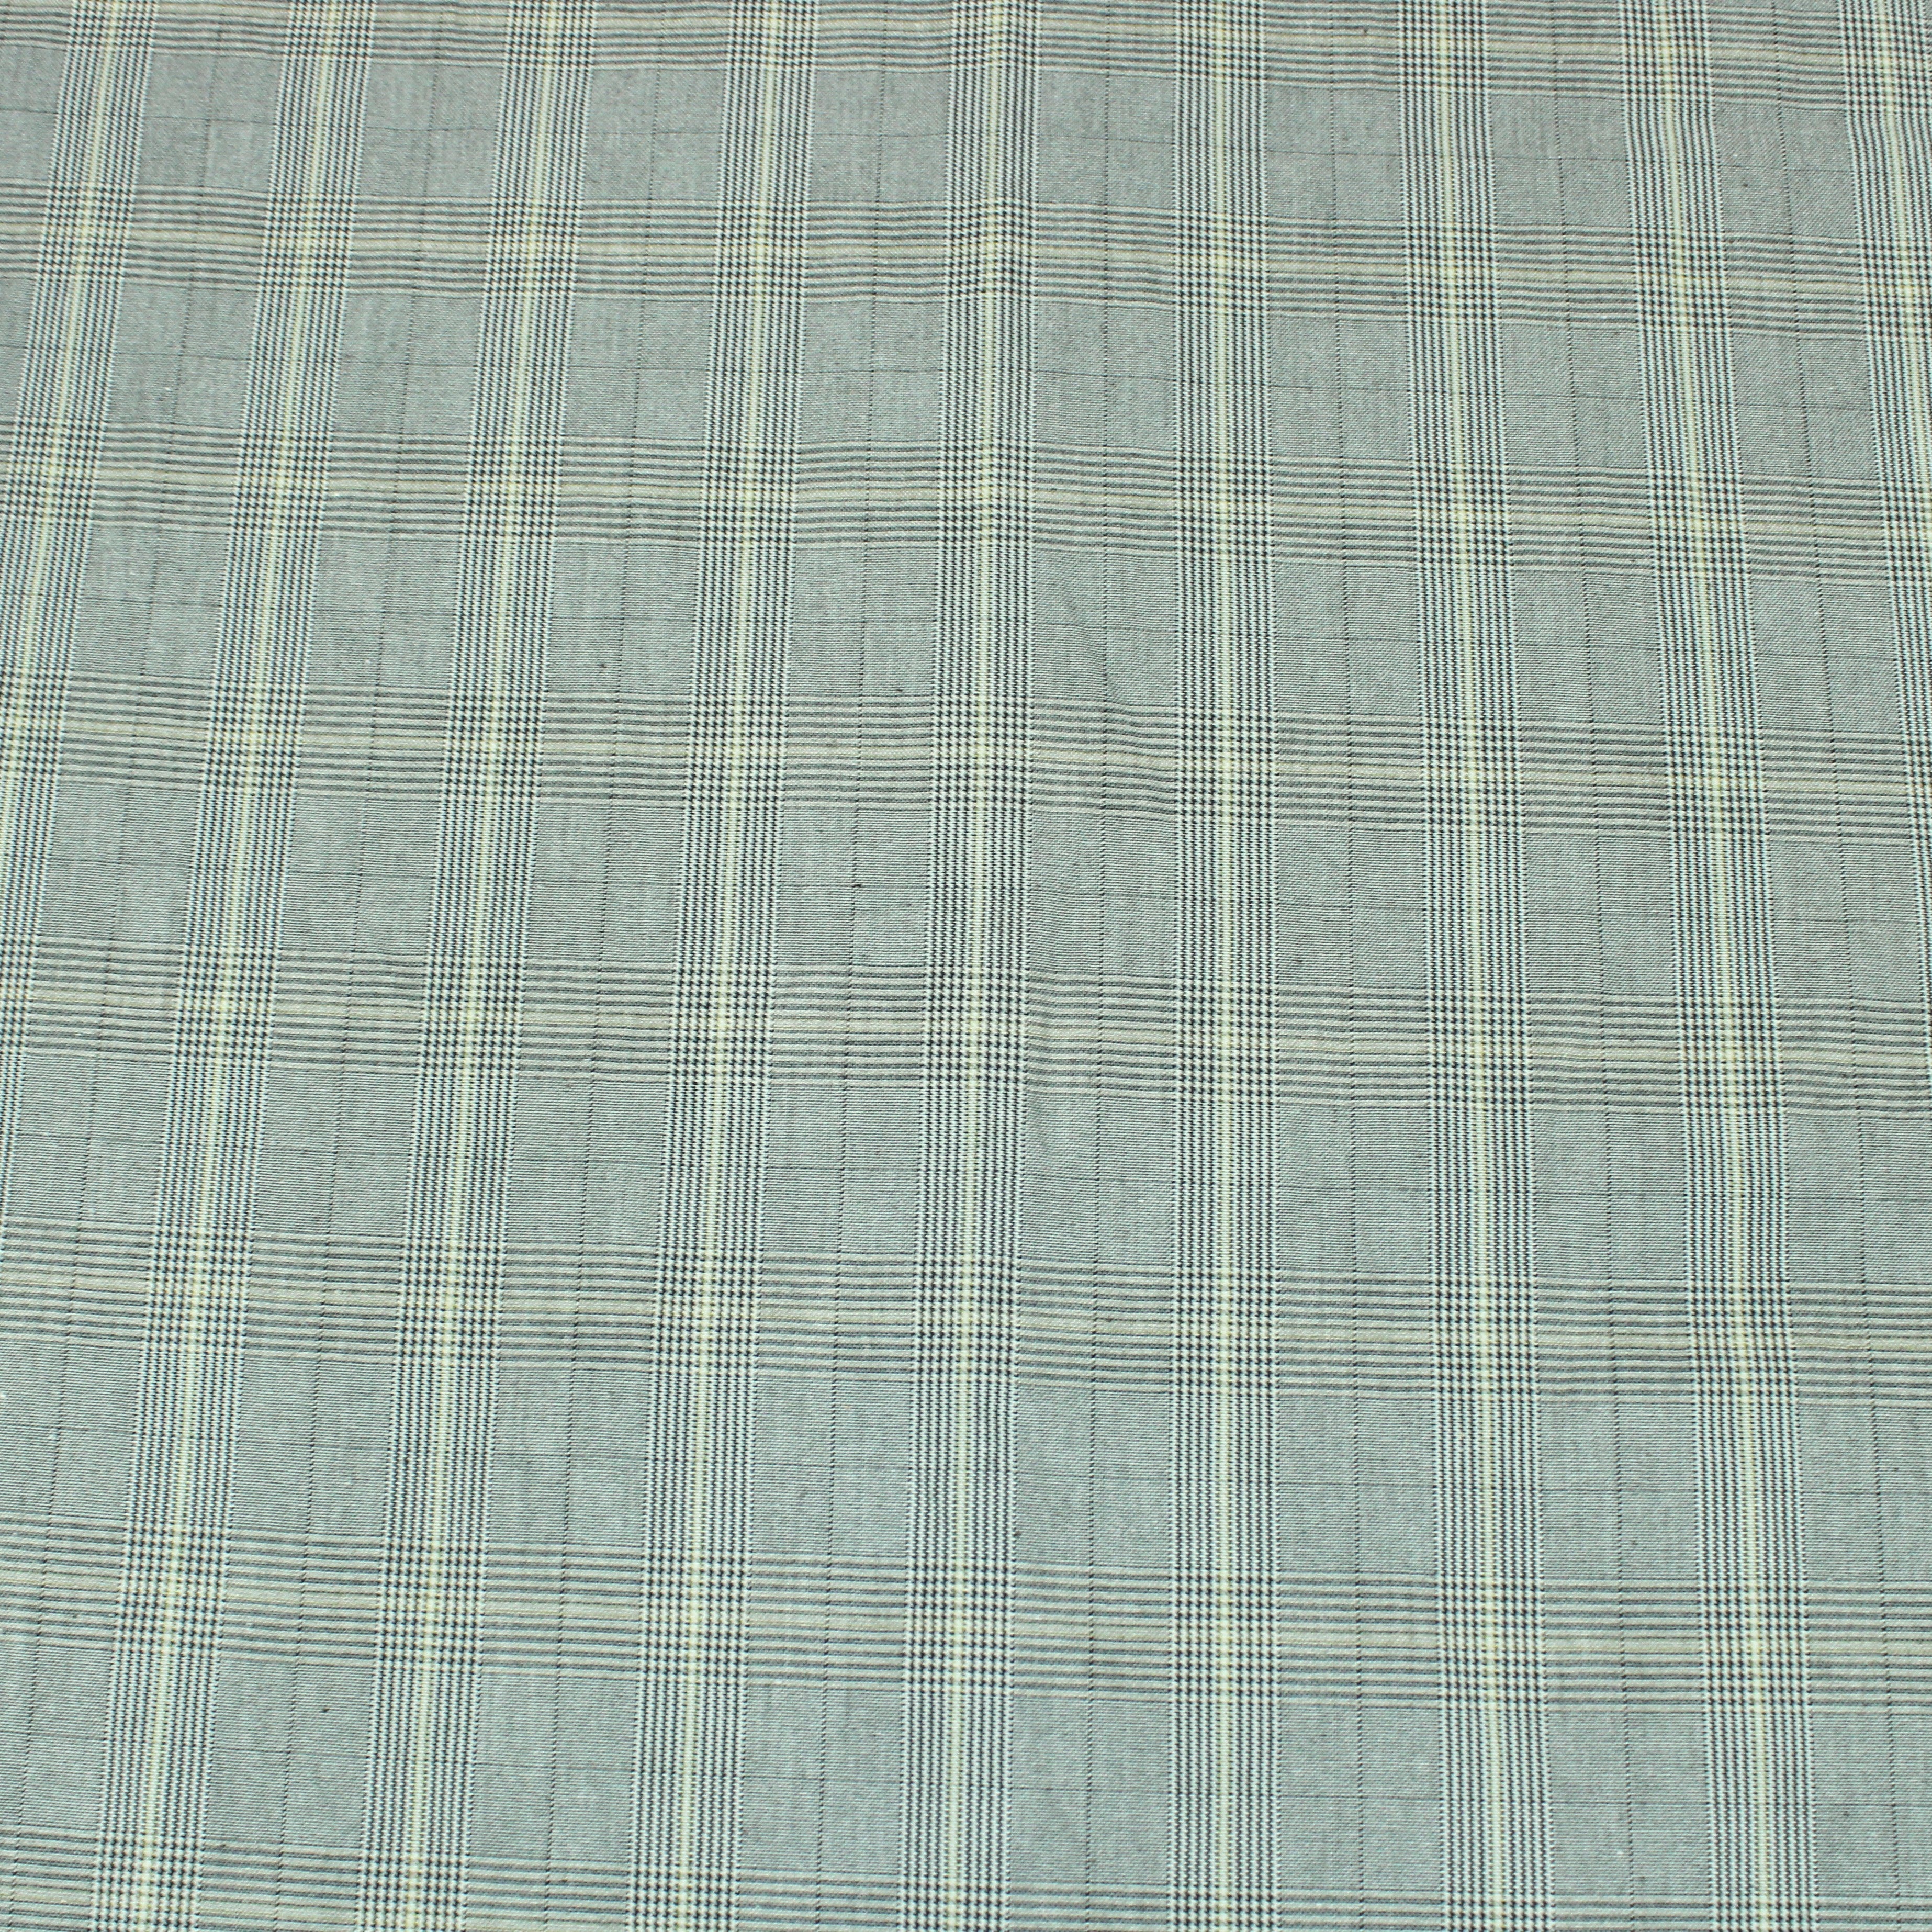 Cotton fabrics